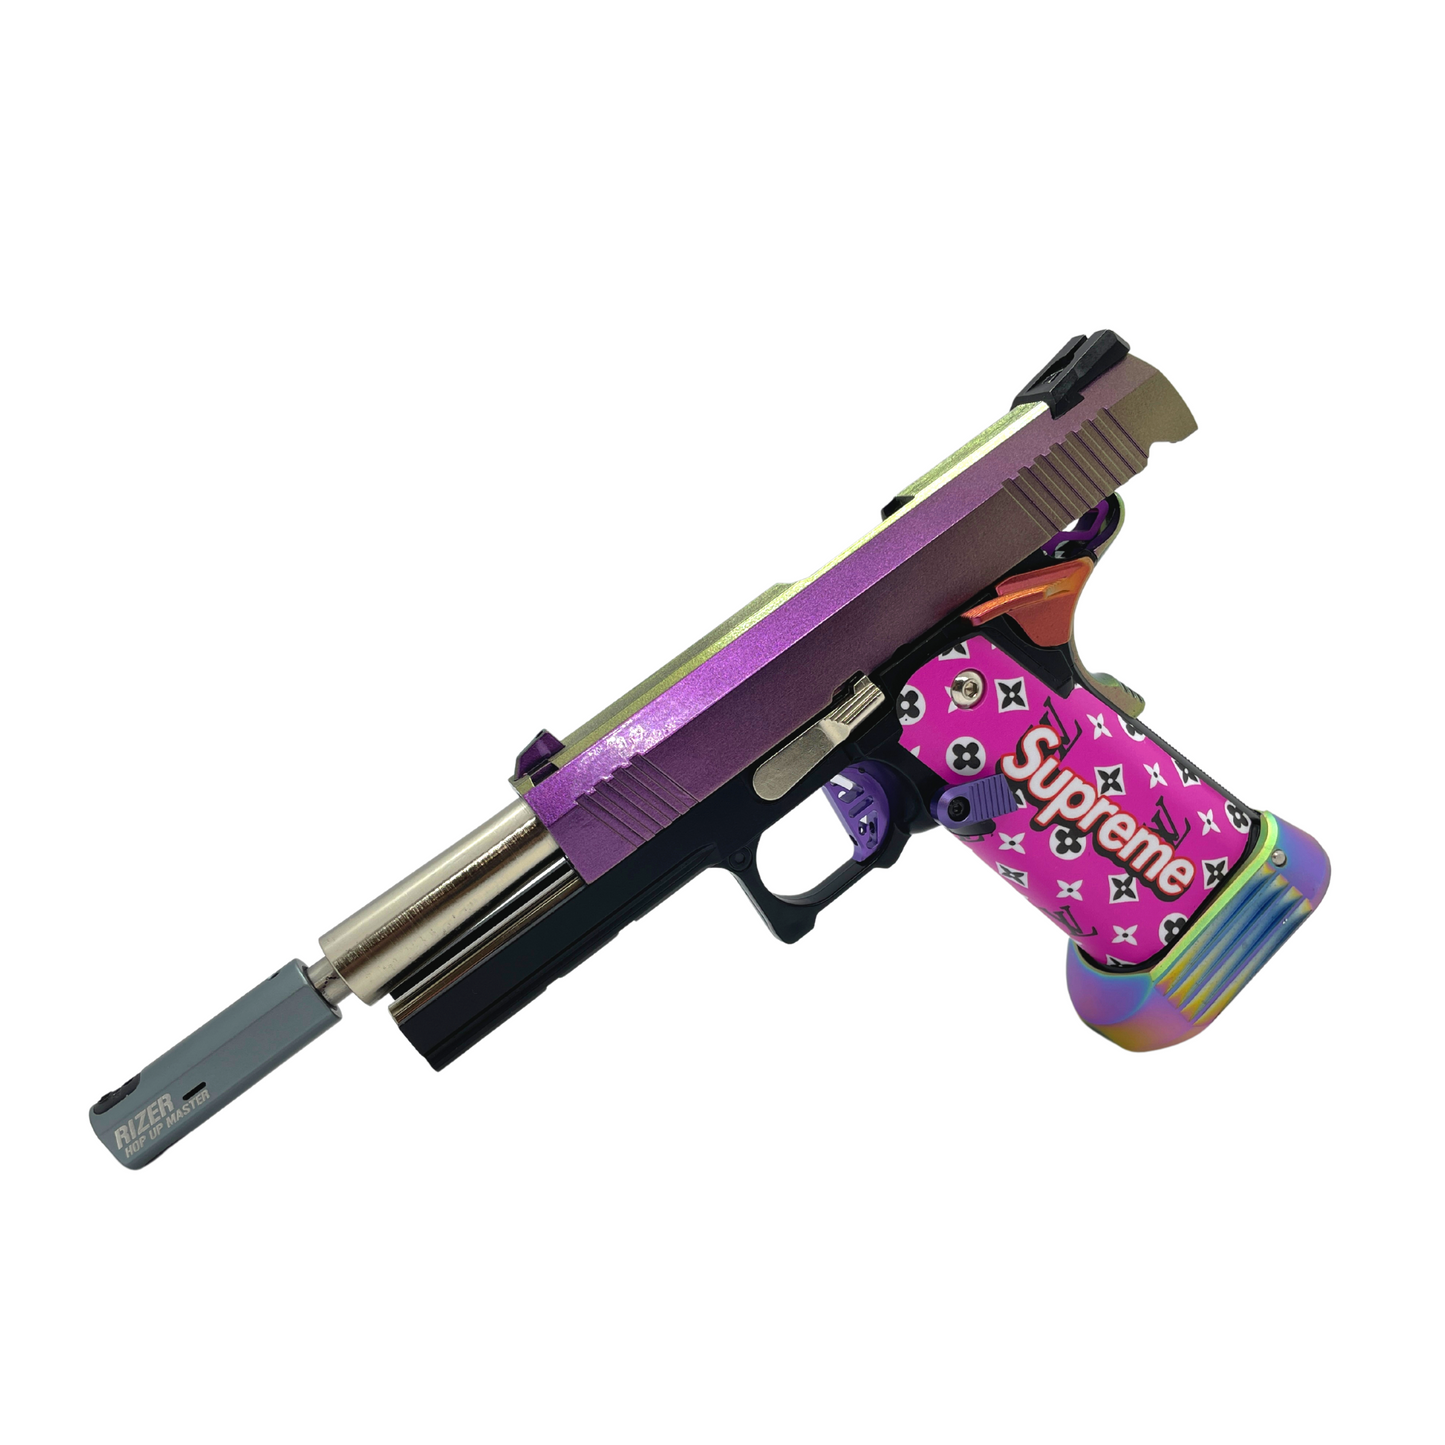 "Pink Supreme" 1 of 1 Colourshift Custom GBU 4.3 Hi-Capa Pistol - Gel Blaster